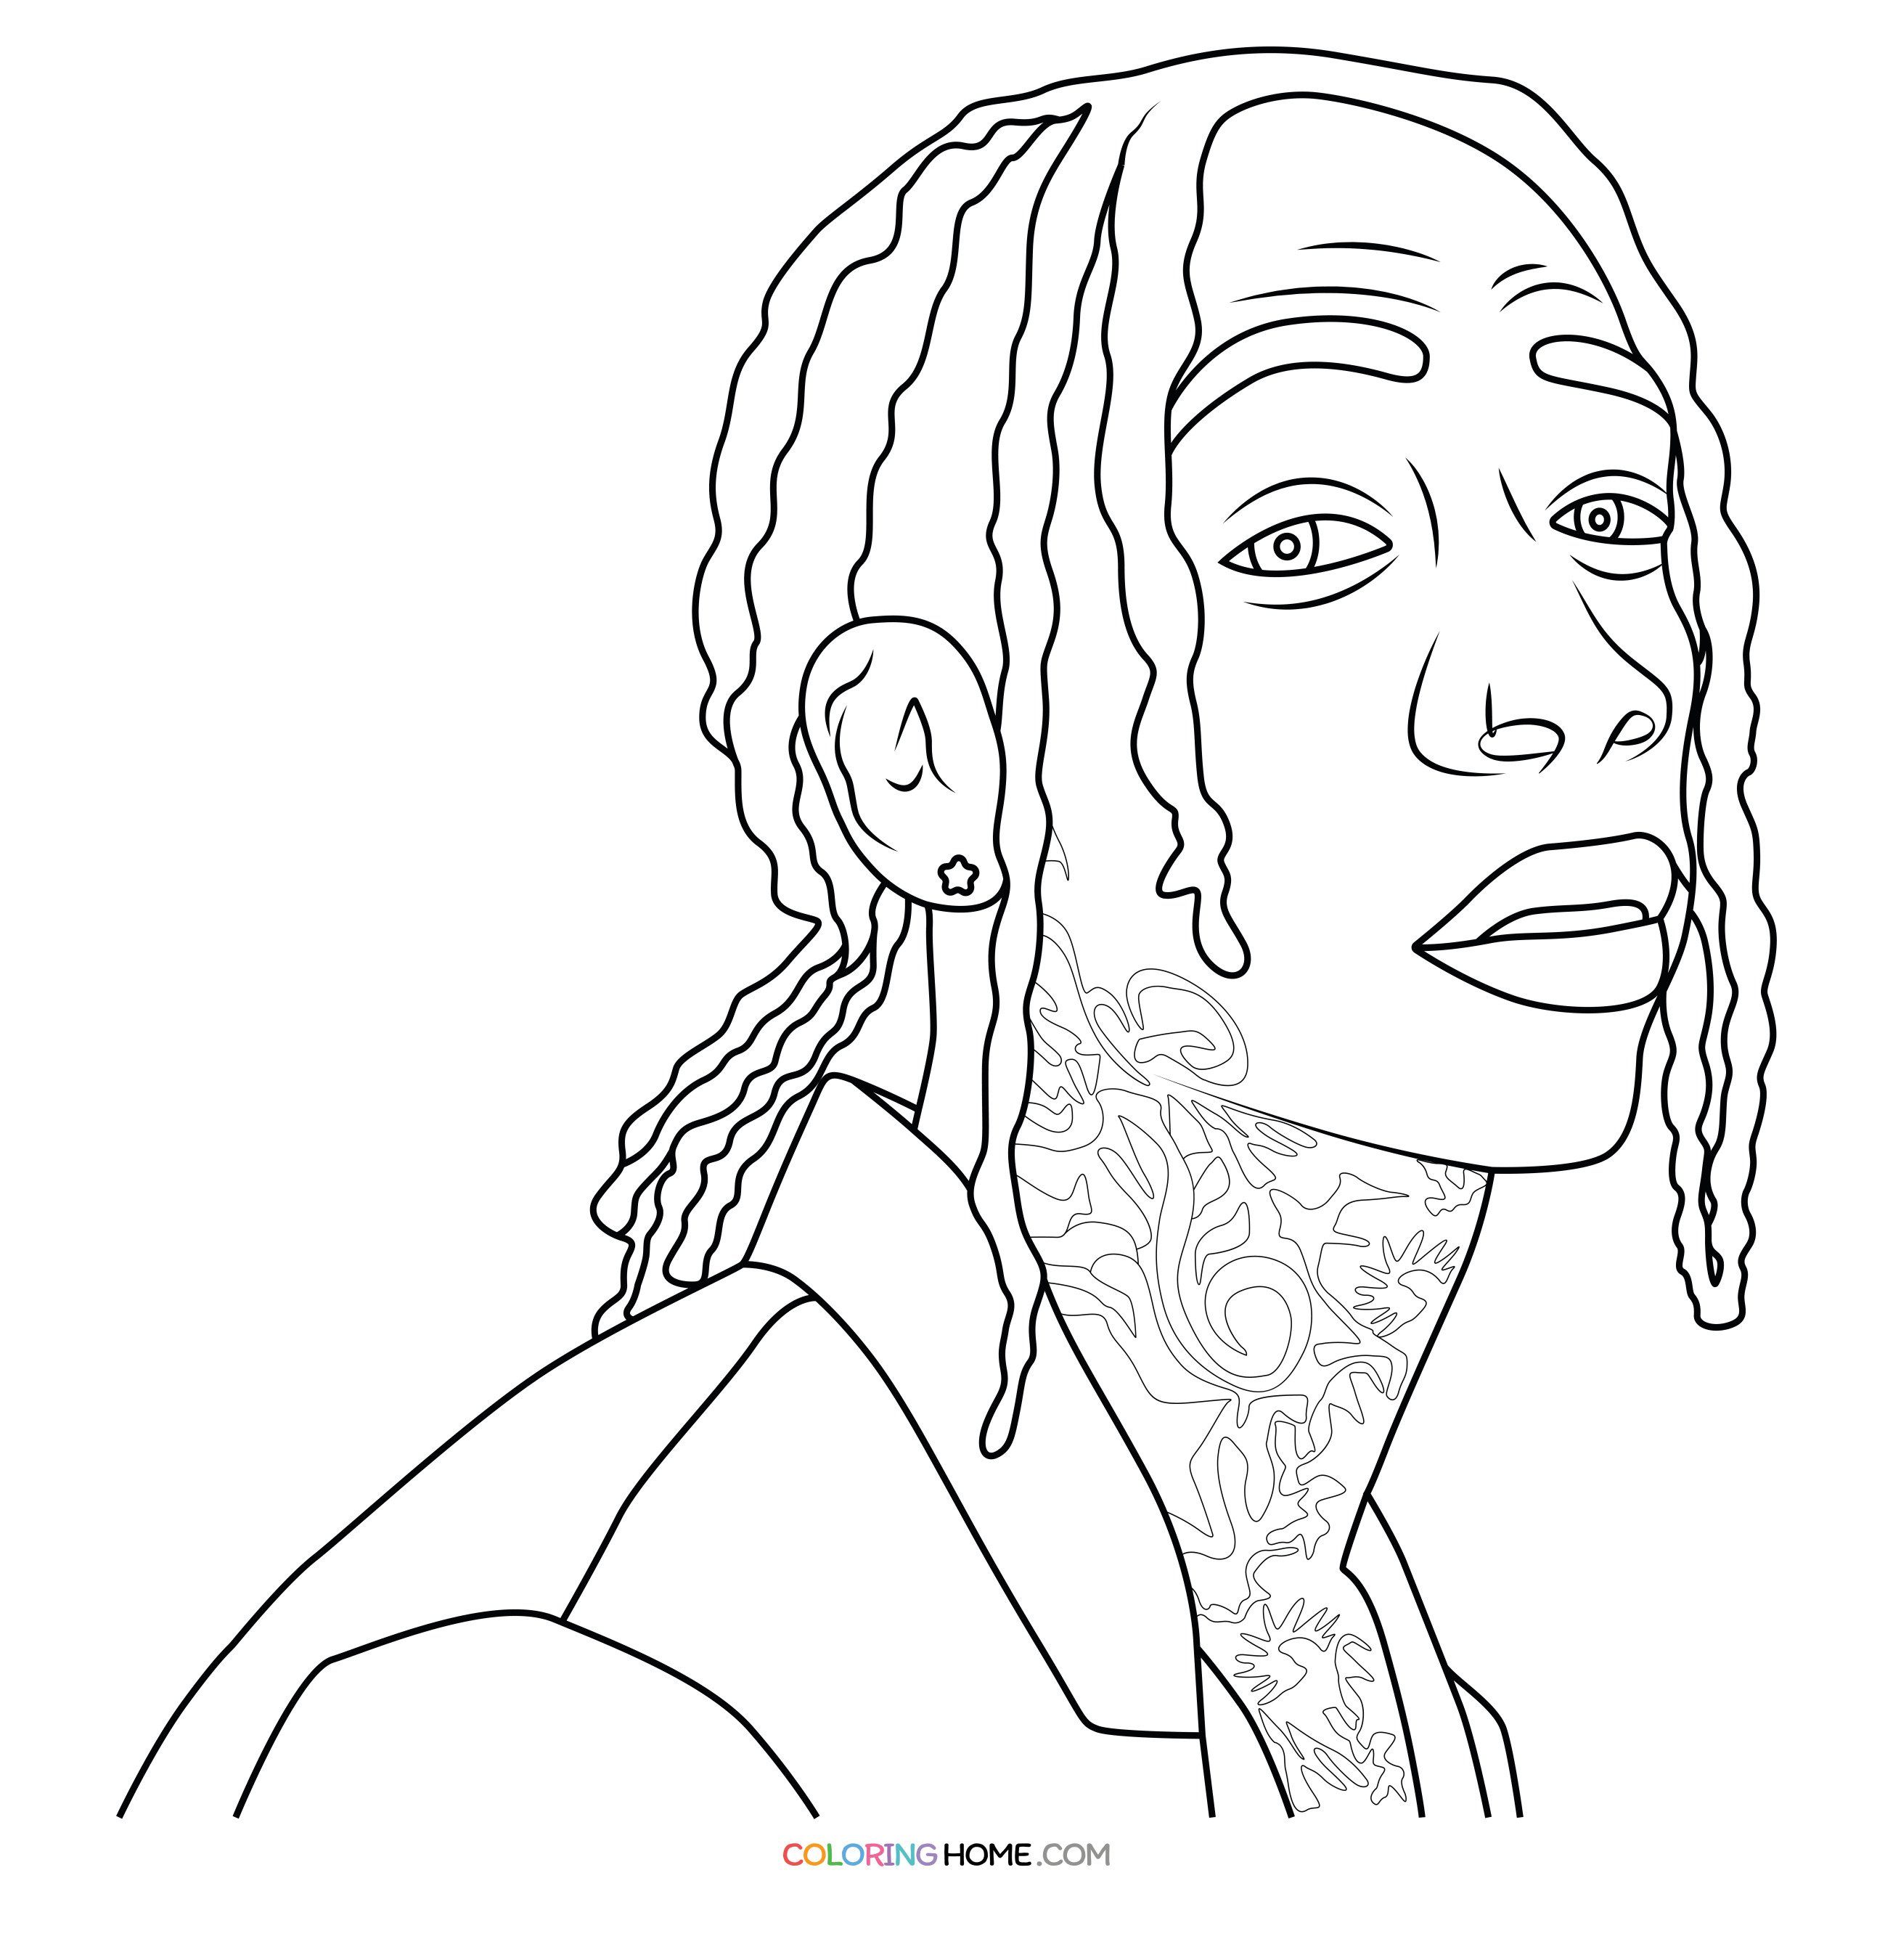 Wiz Khalifa coloring page